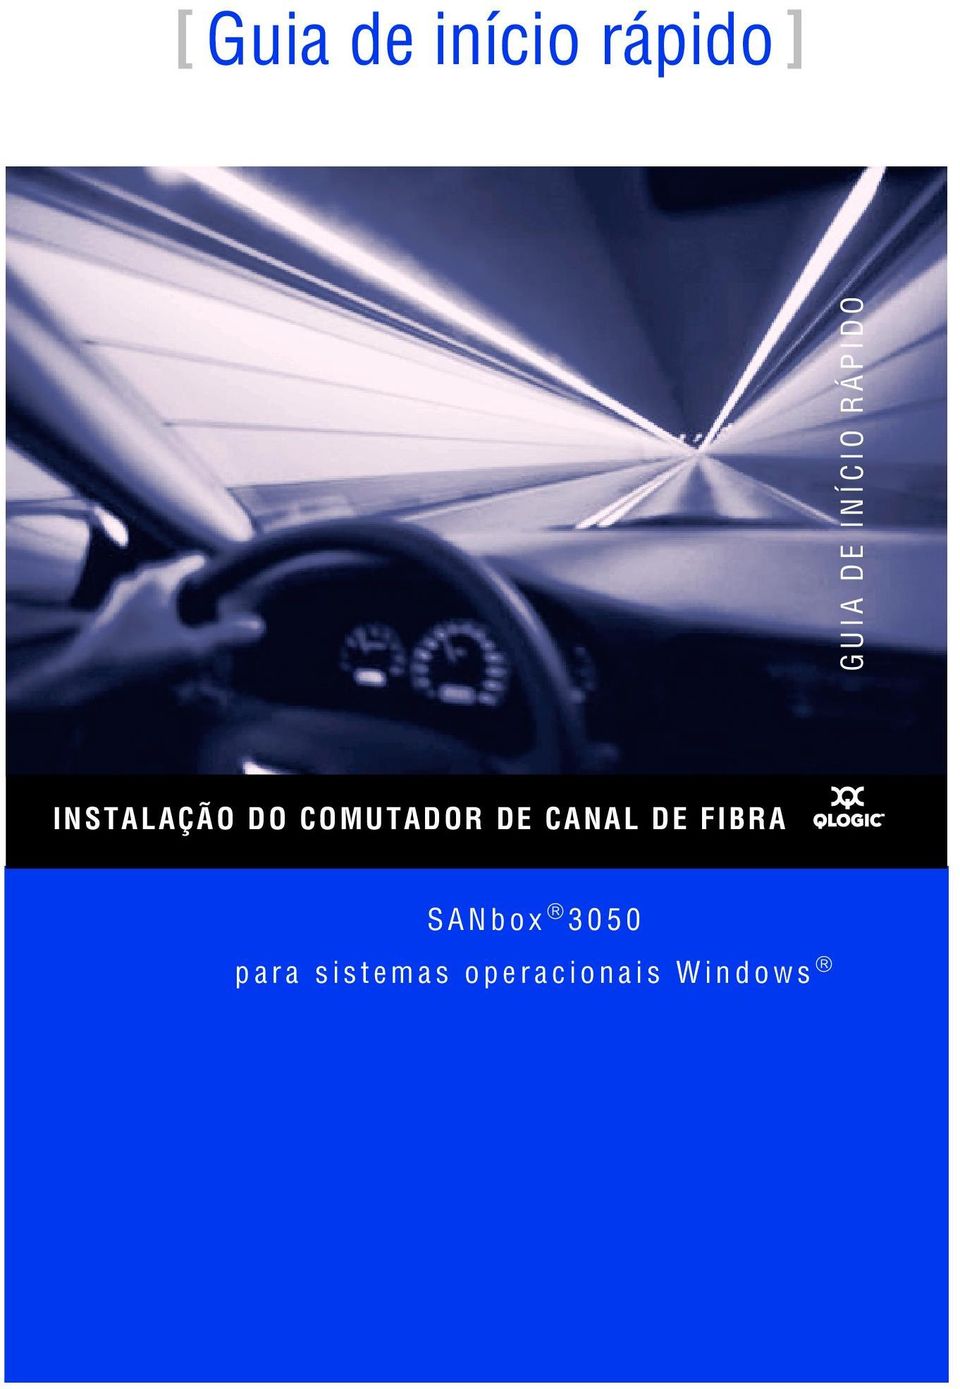 COMUTADOR DE CANAL DE FIBRA P